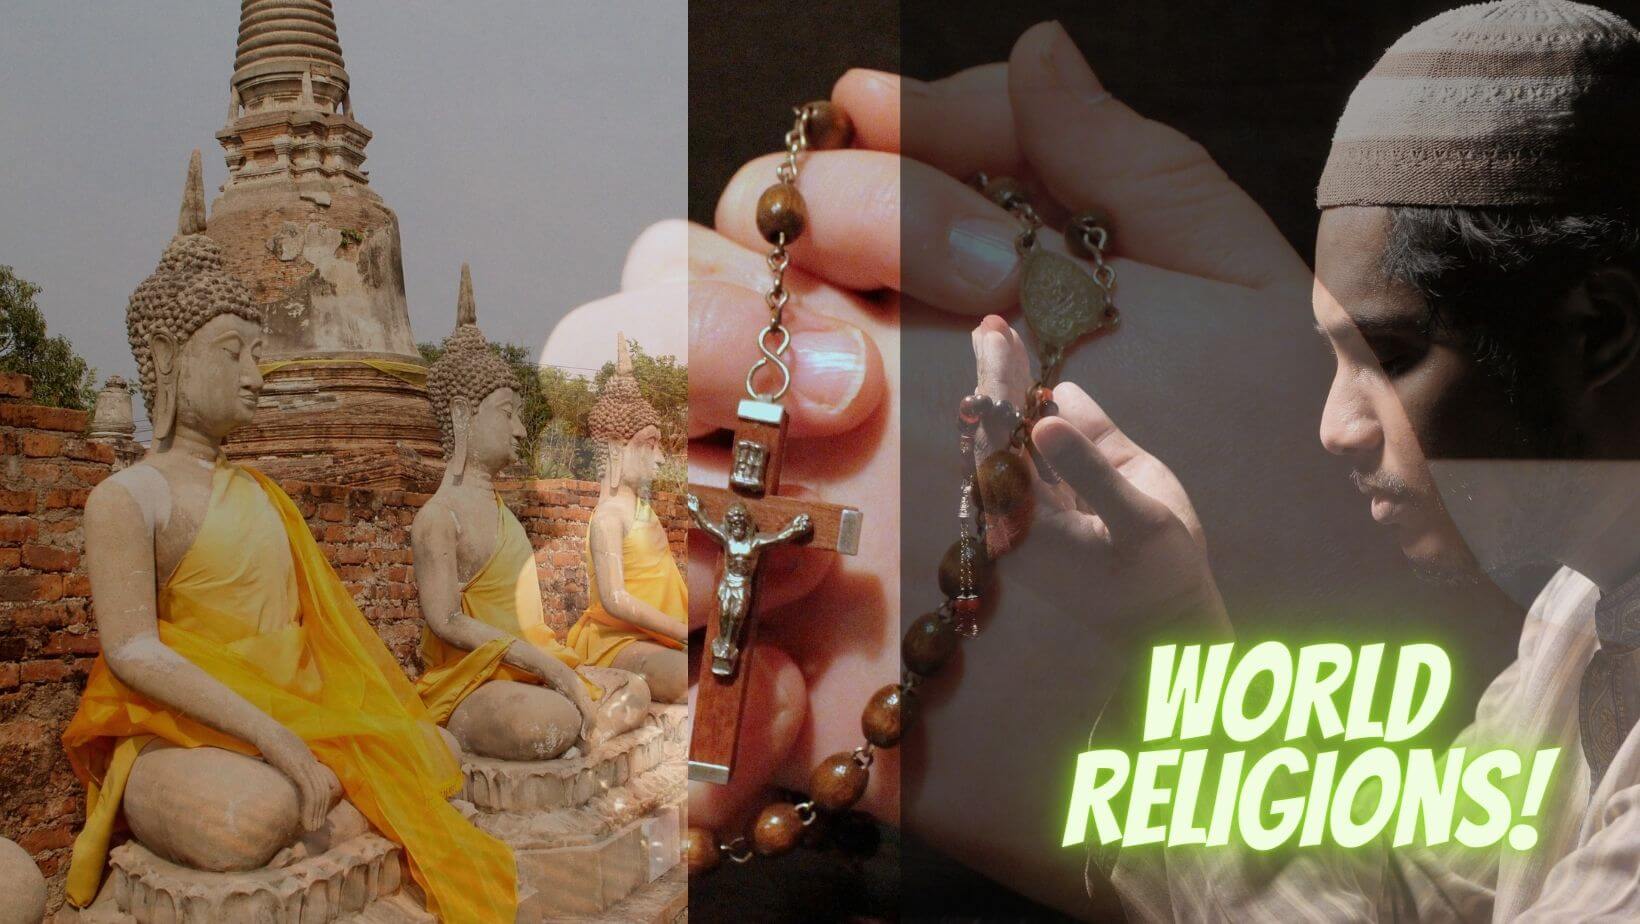 world religions